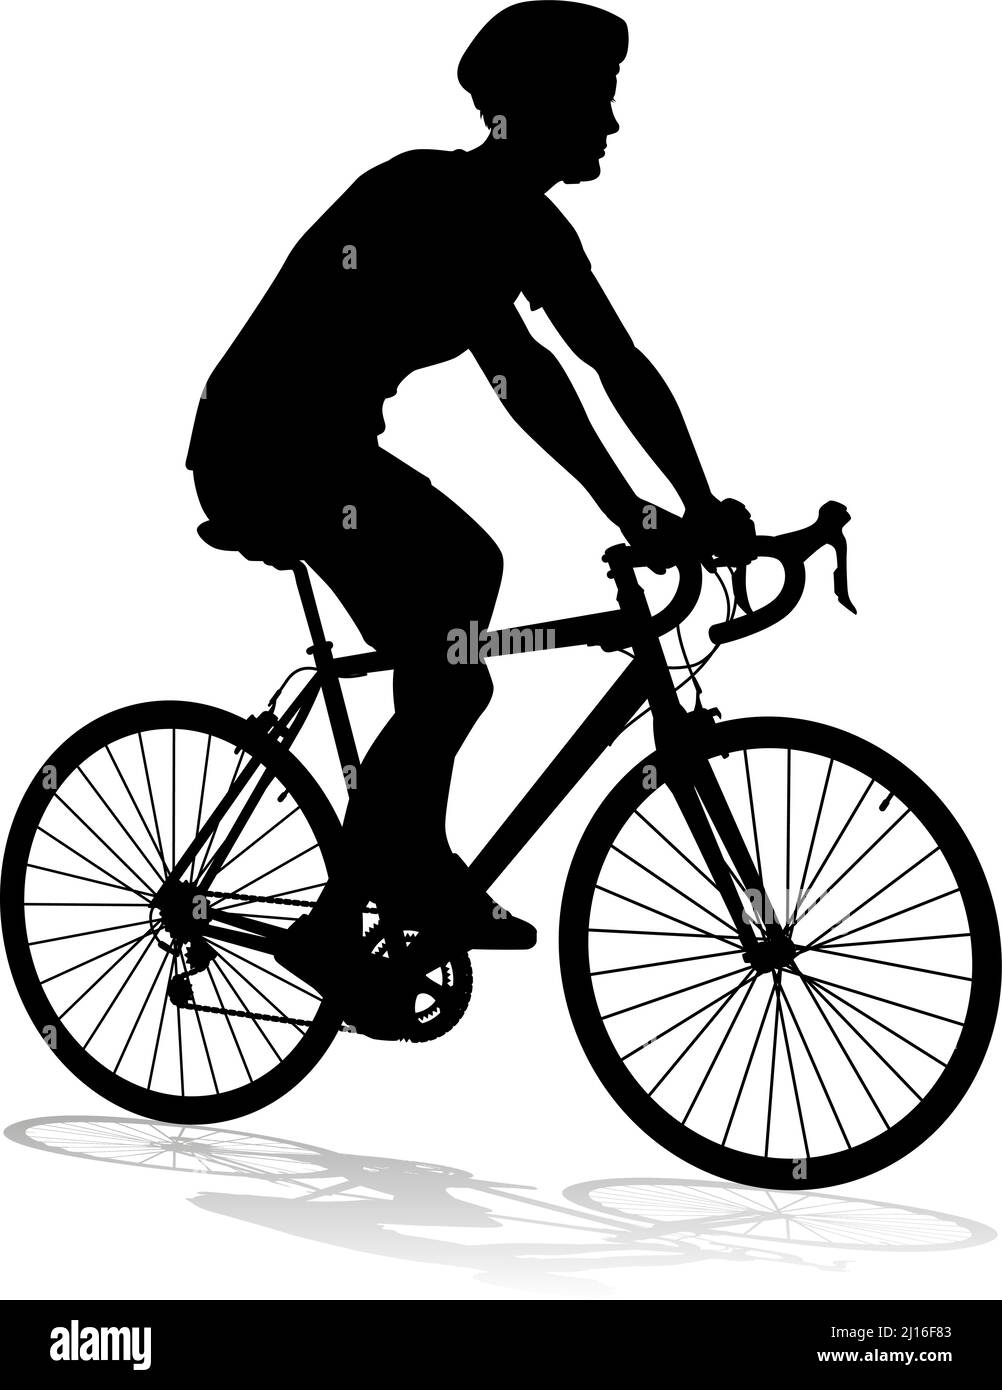 Fahrrad und Radfahrer Silhouette Stock Vektor